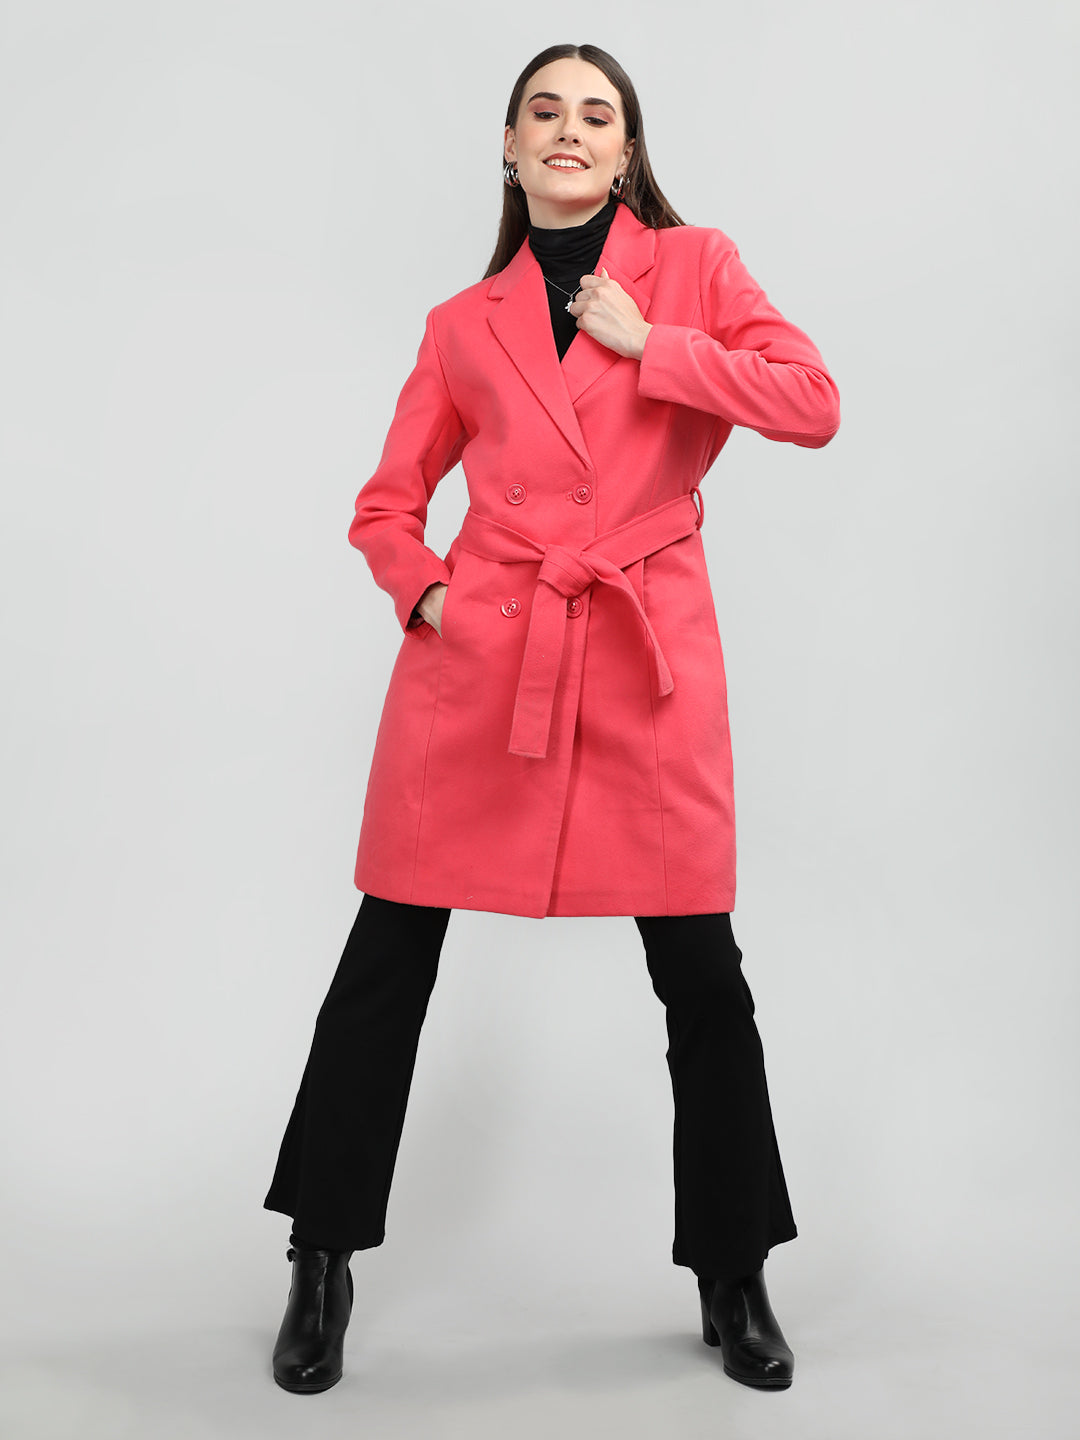 CHKOKKO Women Winter Wear Stylish Coat